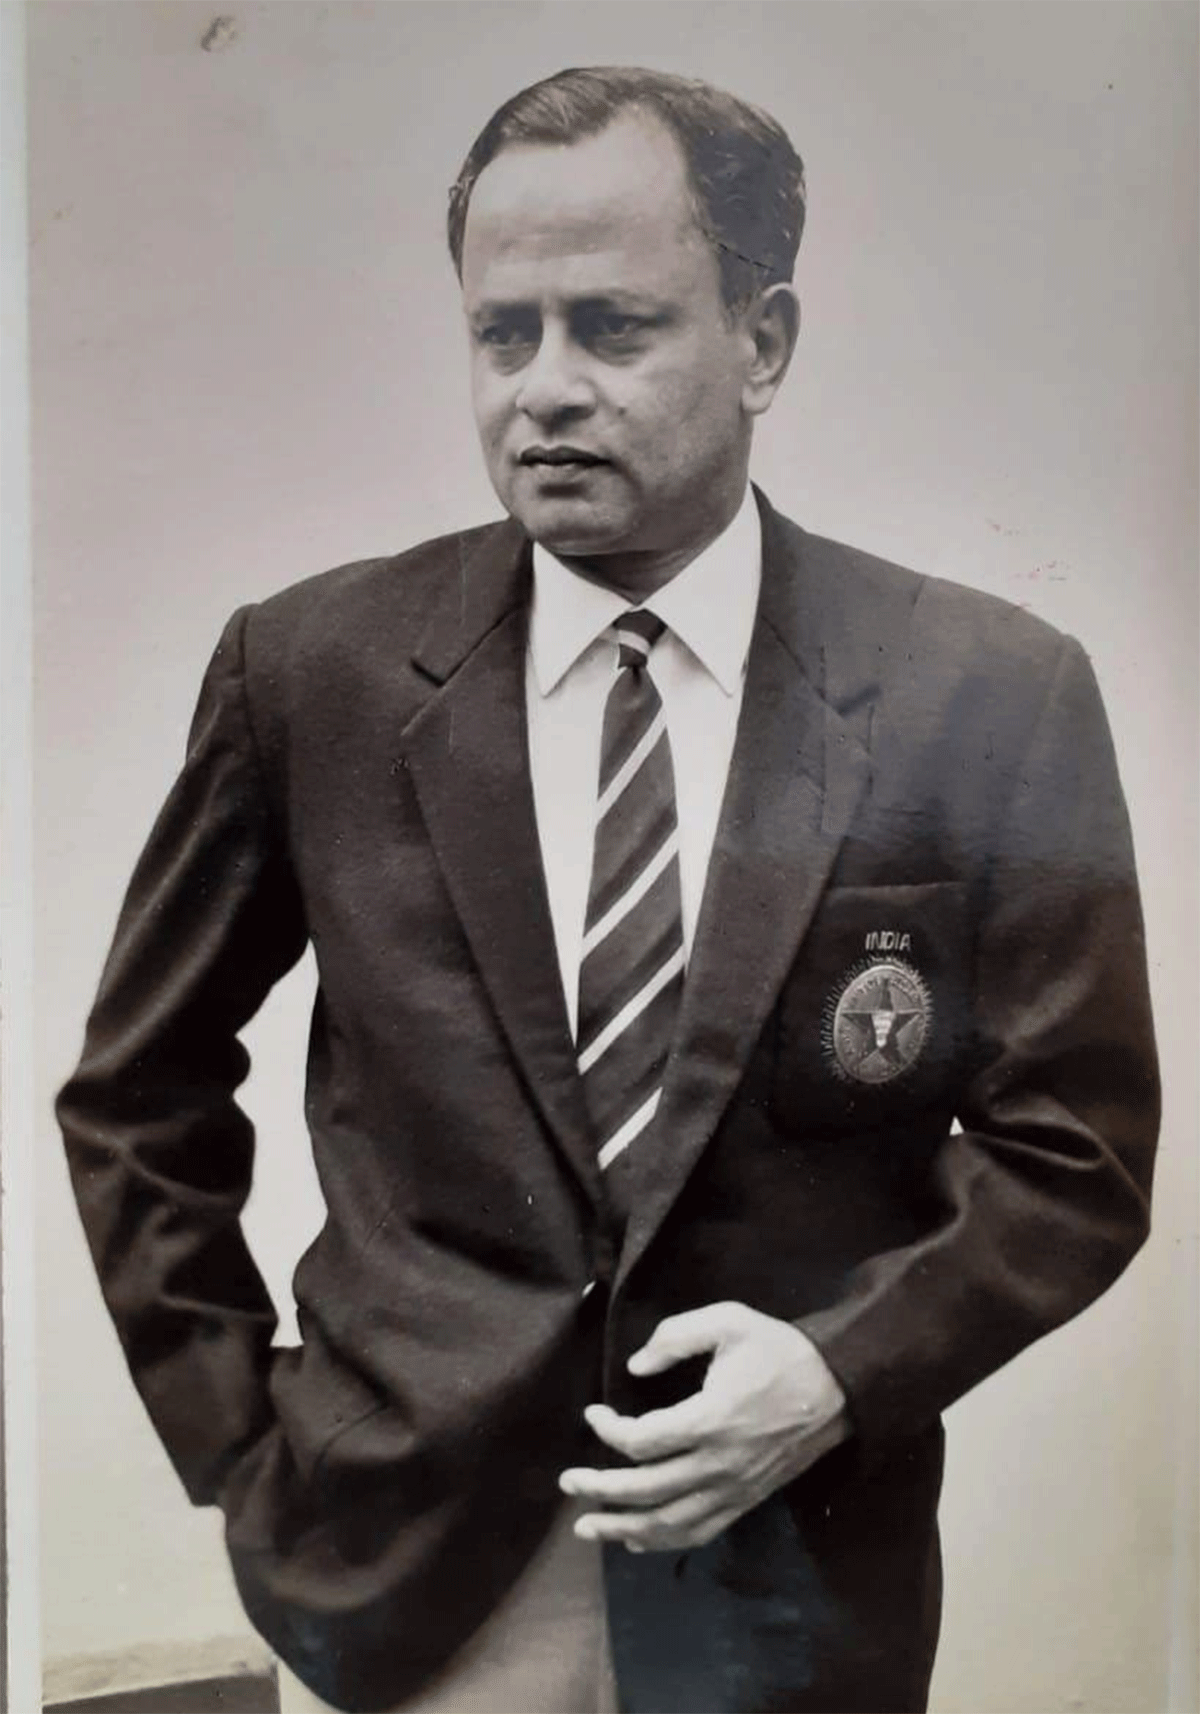 Nandu Natekar had represented India in the 1966 Commonwealth Games